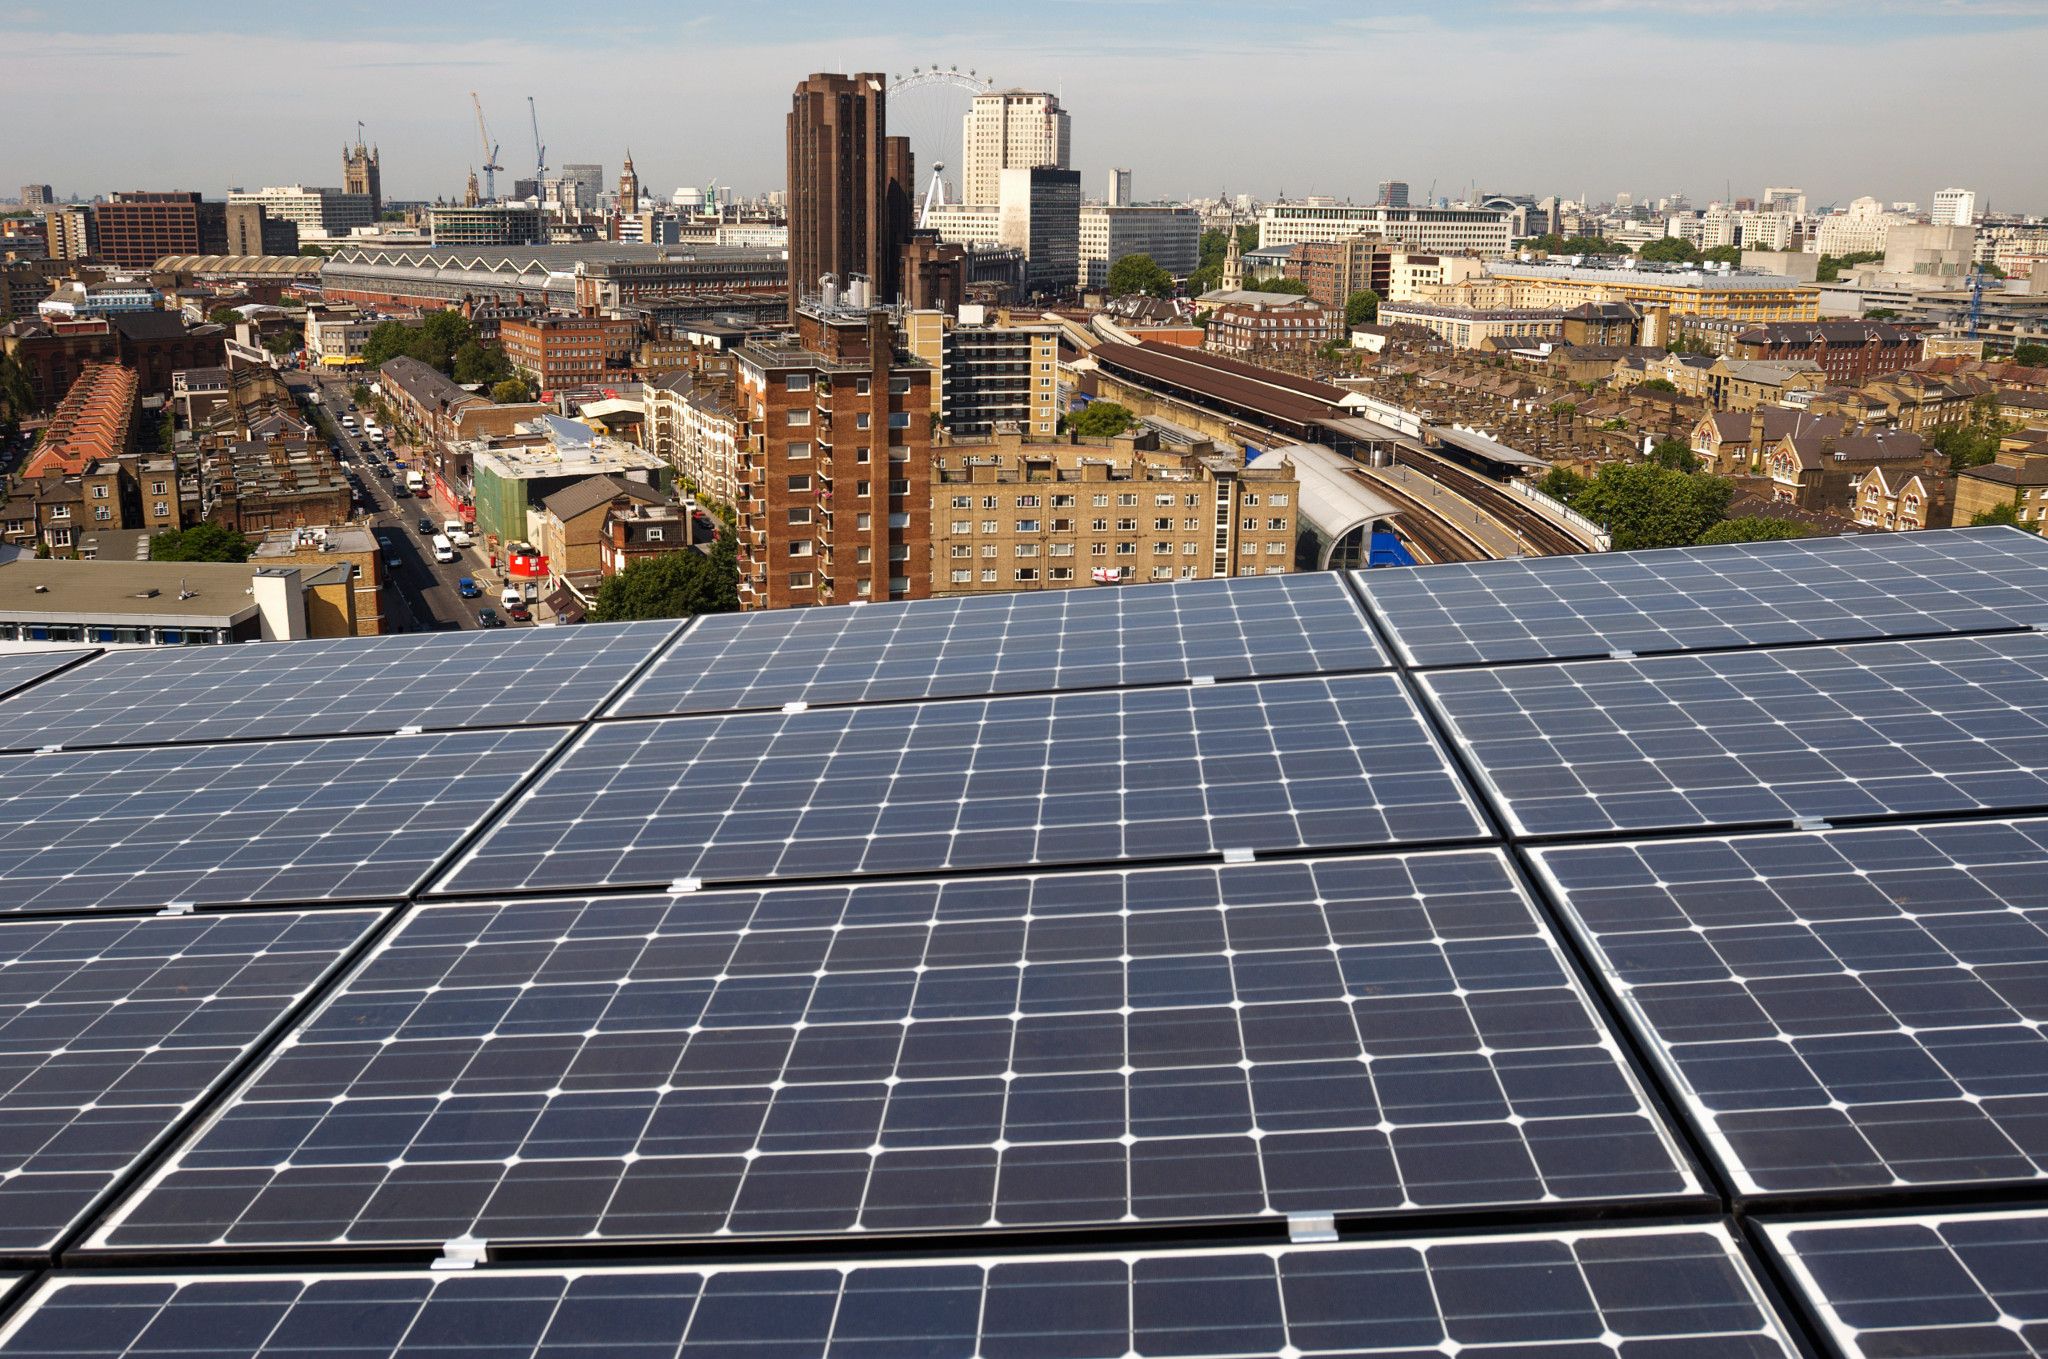 Solar panels on an urban rooftop